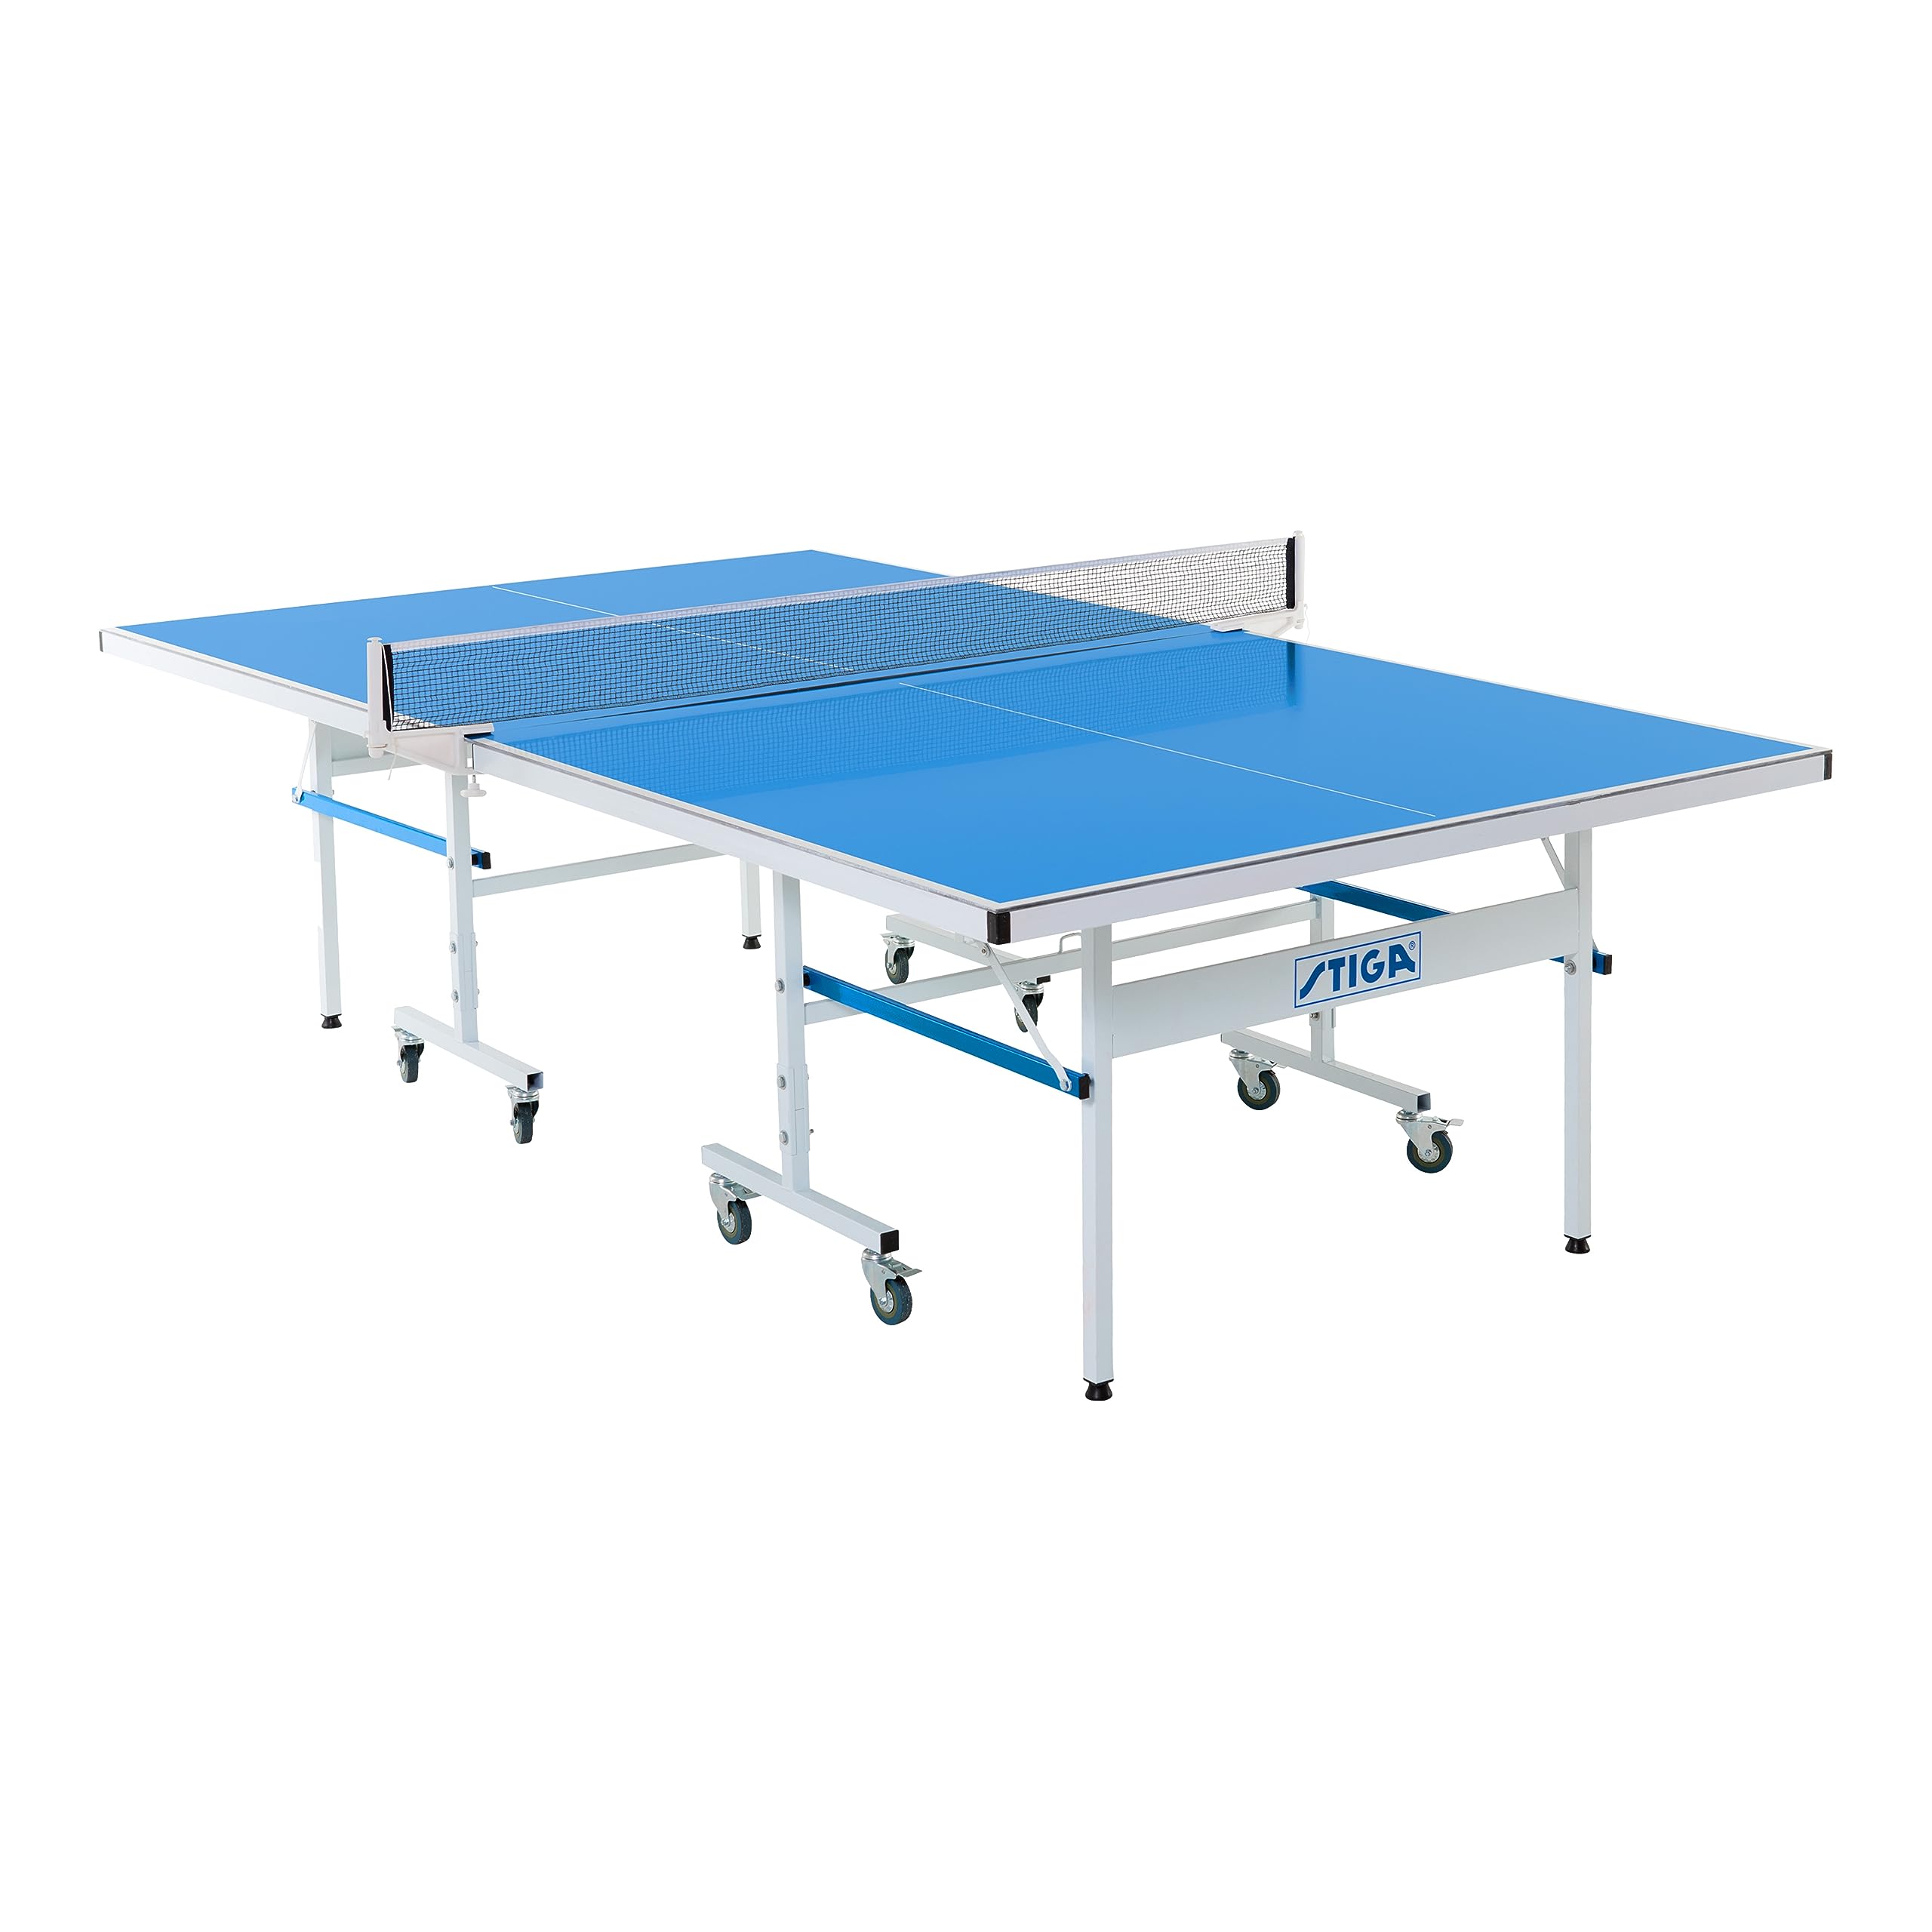 STIGA XTR Professional Table Tennis Tables